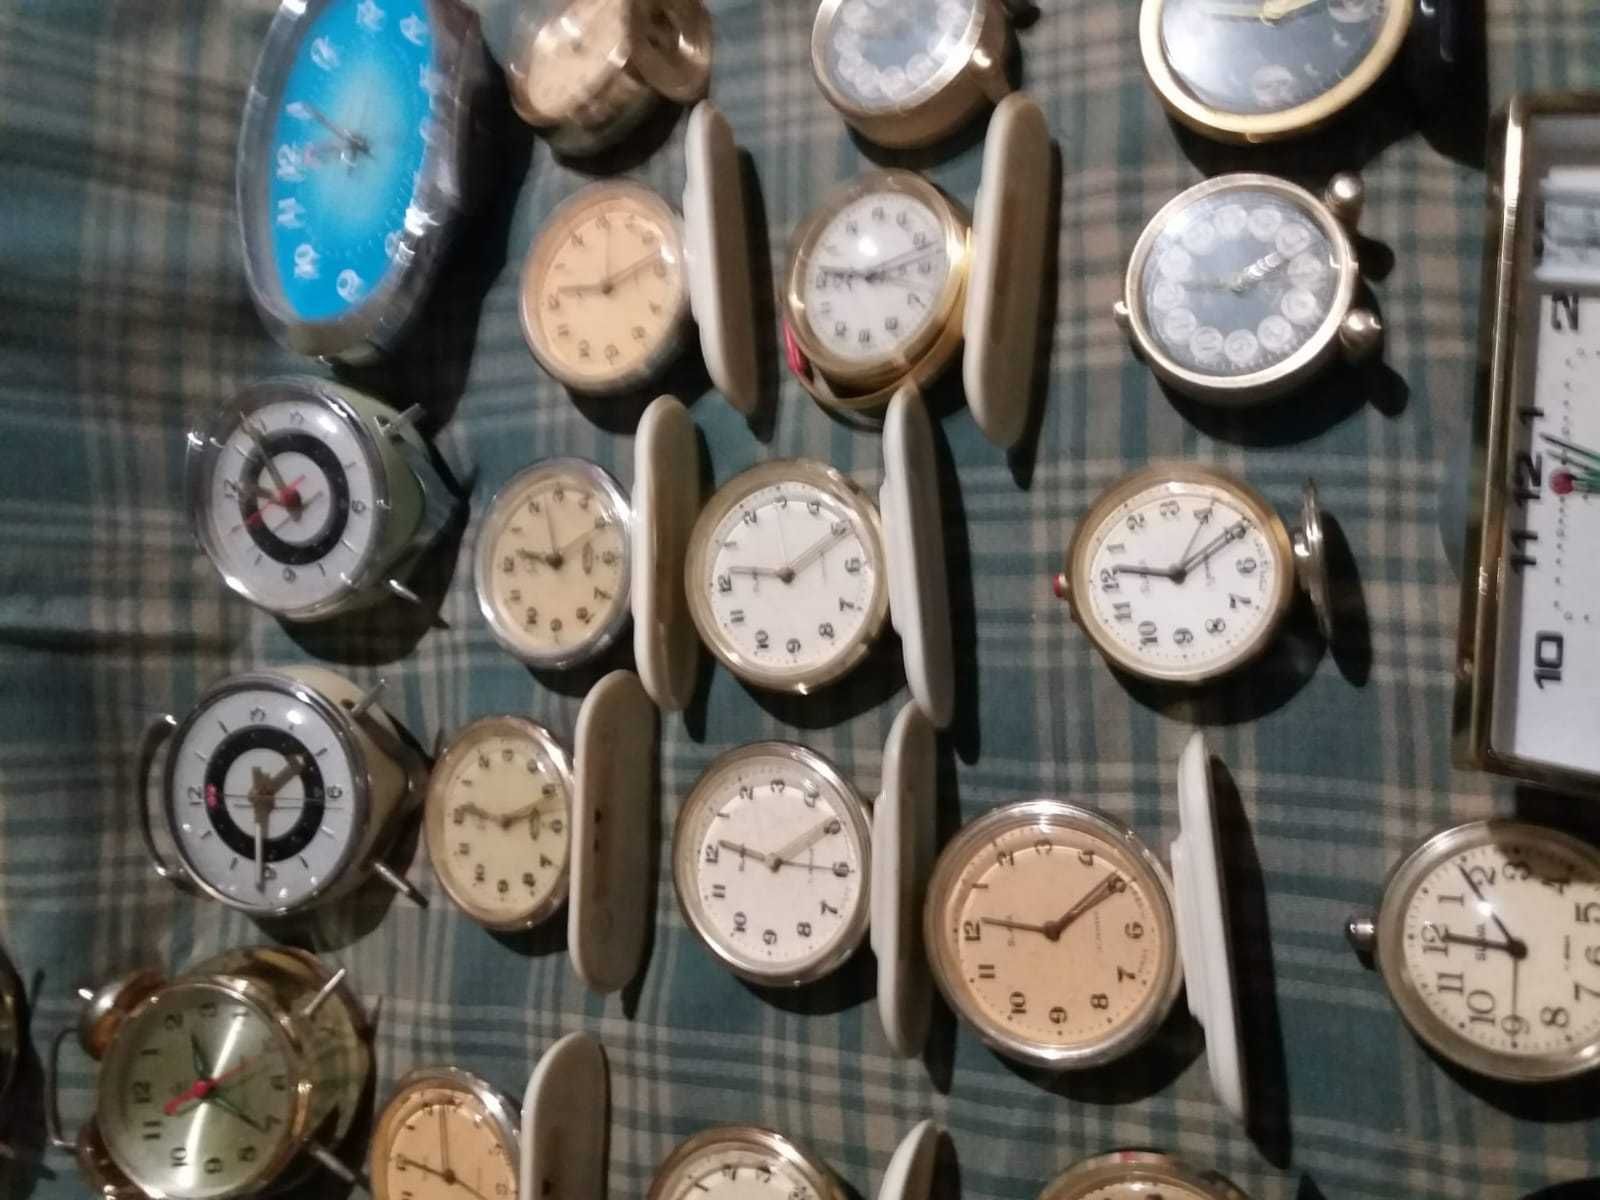 colectie ceasuri vechi si ft vechi